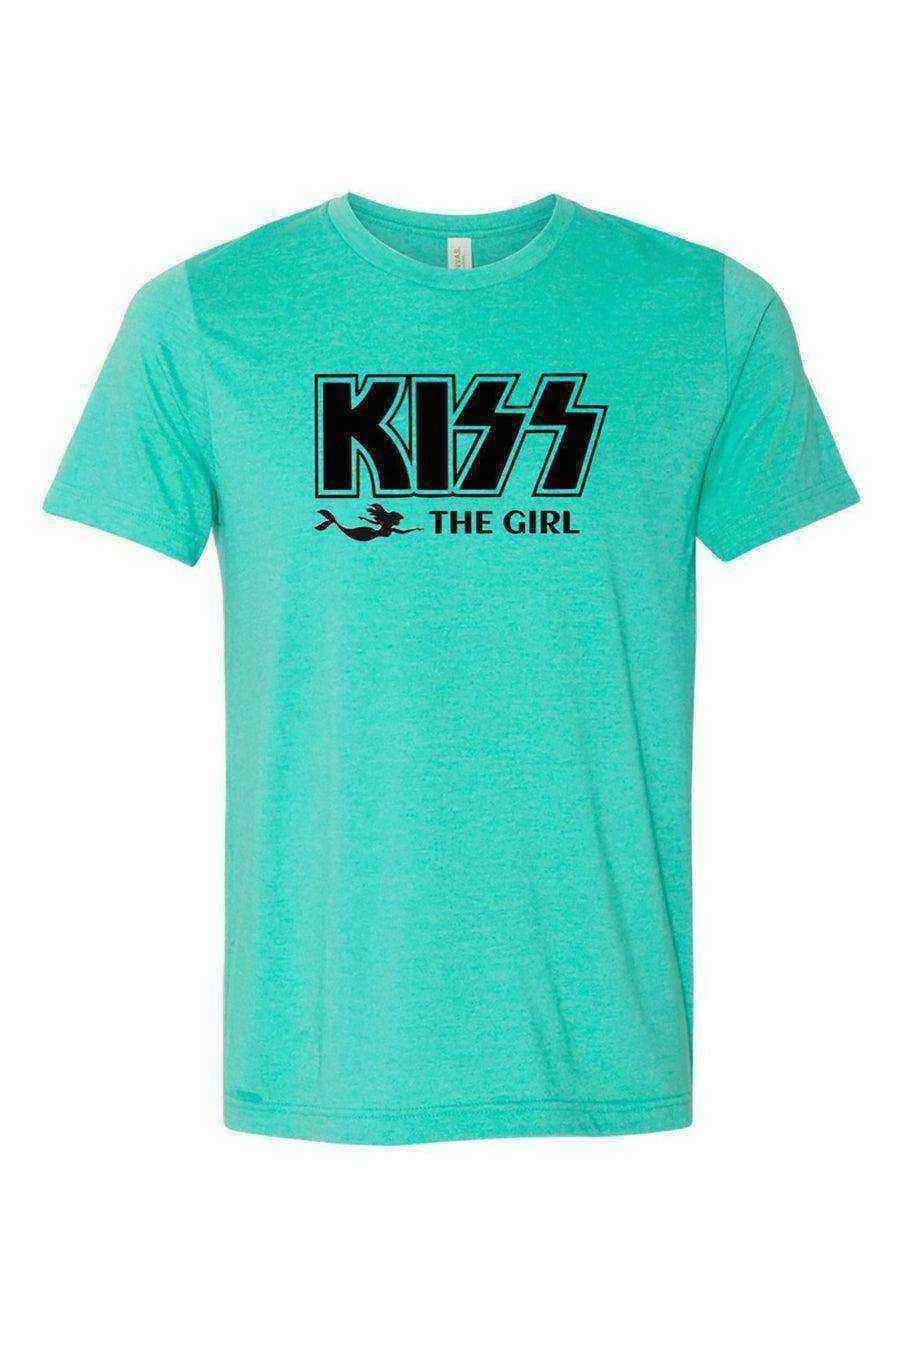 Kiss The Girl Shirt | Little Mermaid Shirt | Kiss Shirt - Dylan's Tees